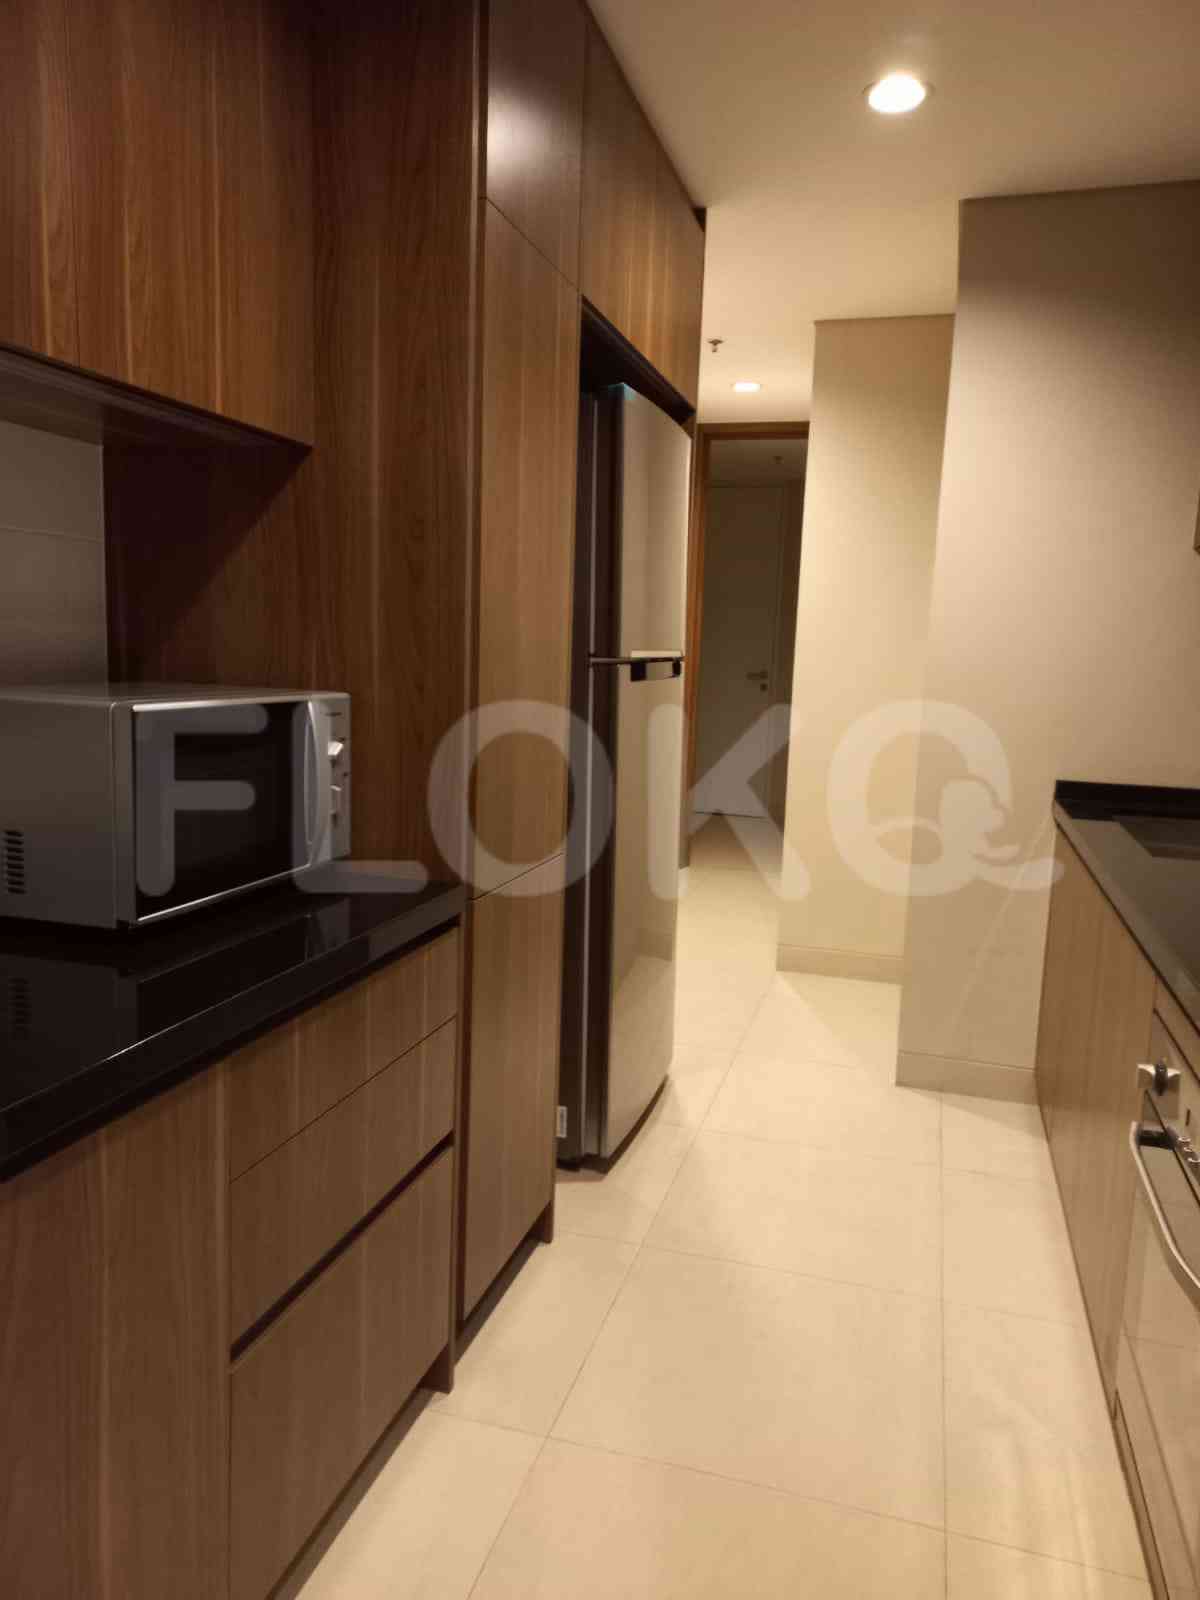 2 Bedroom on 5th Floor for Rent in Apartemen Branz Simatupang - ftb525 4